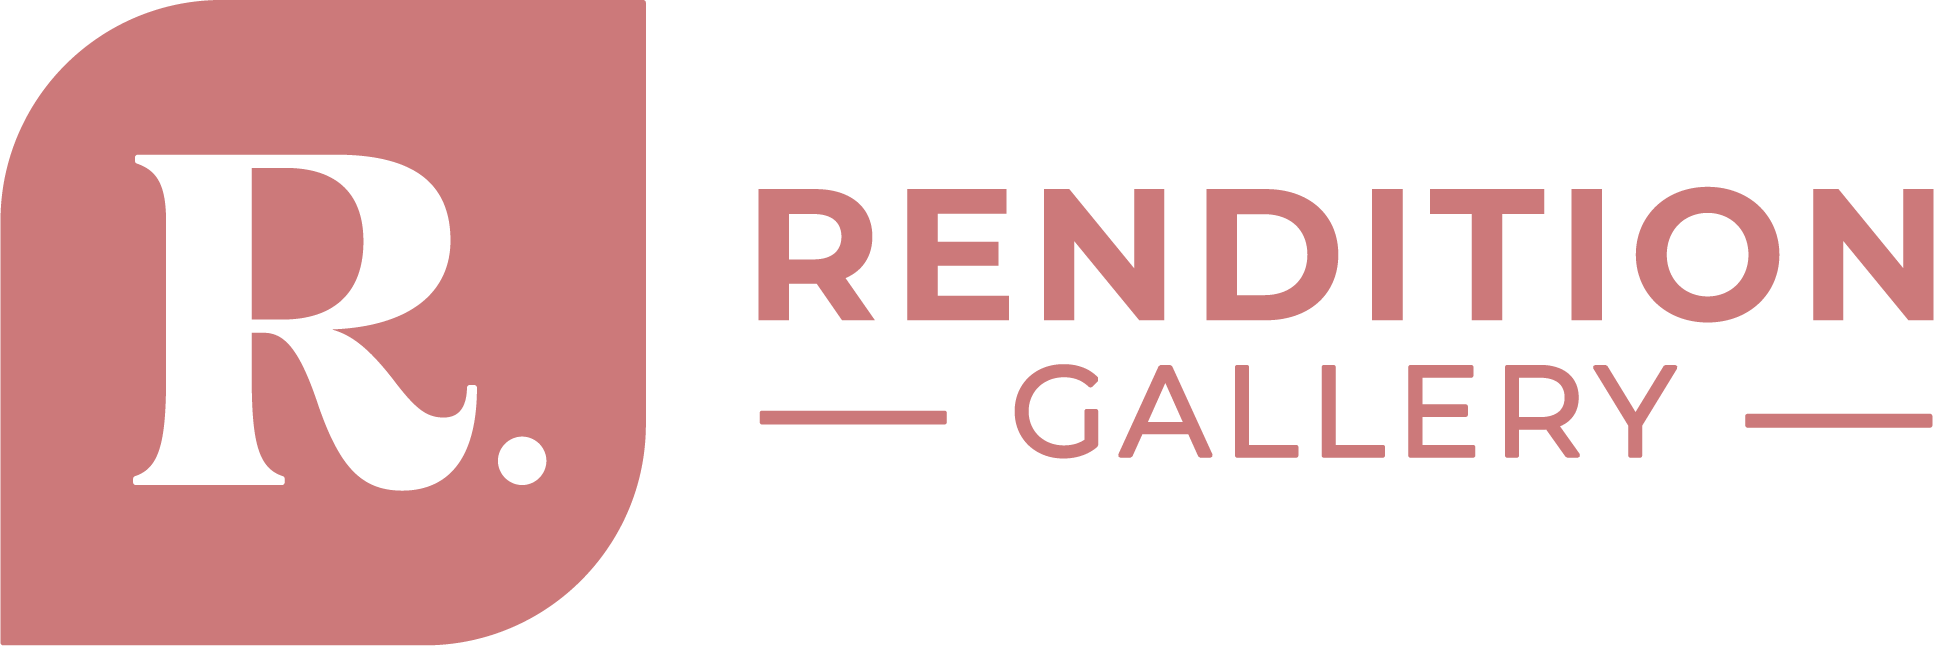 Rendition Gallery